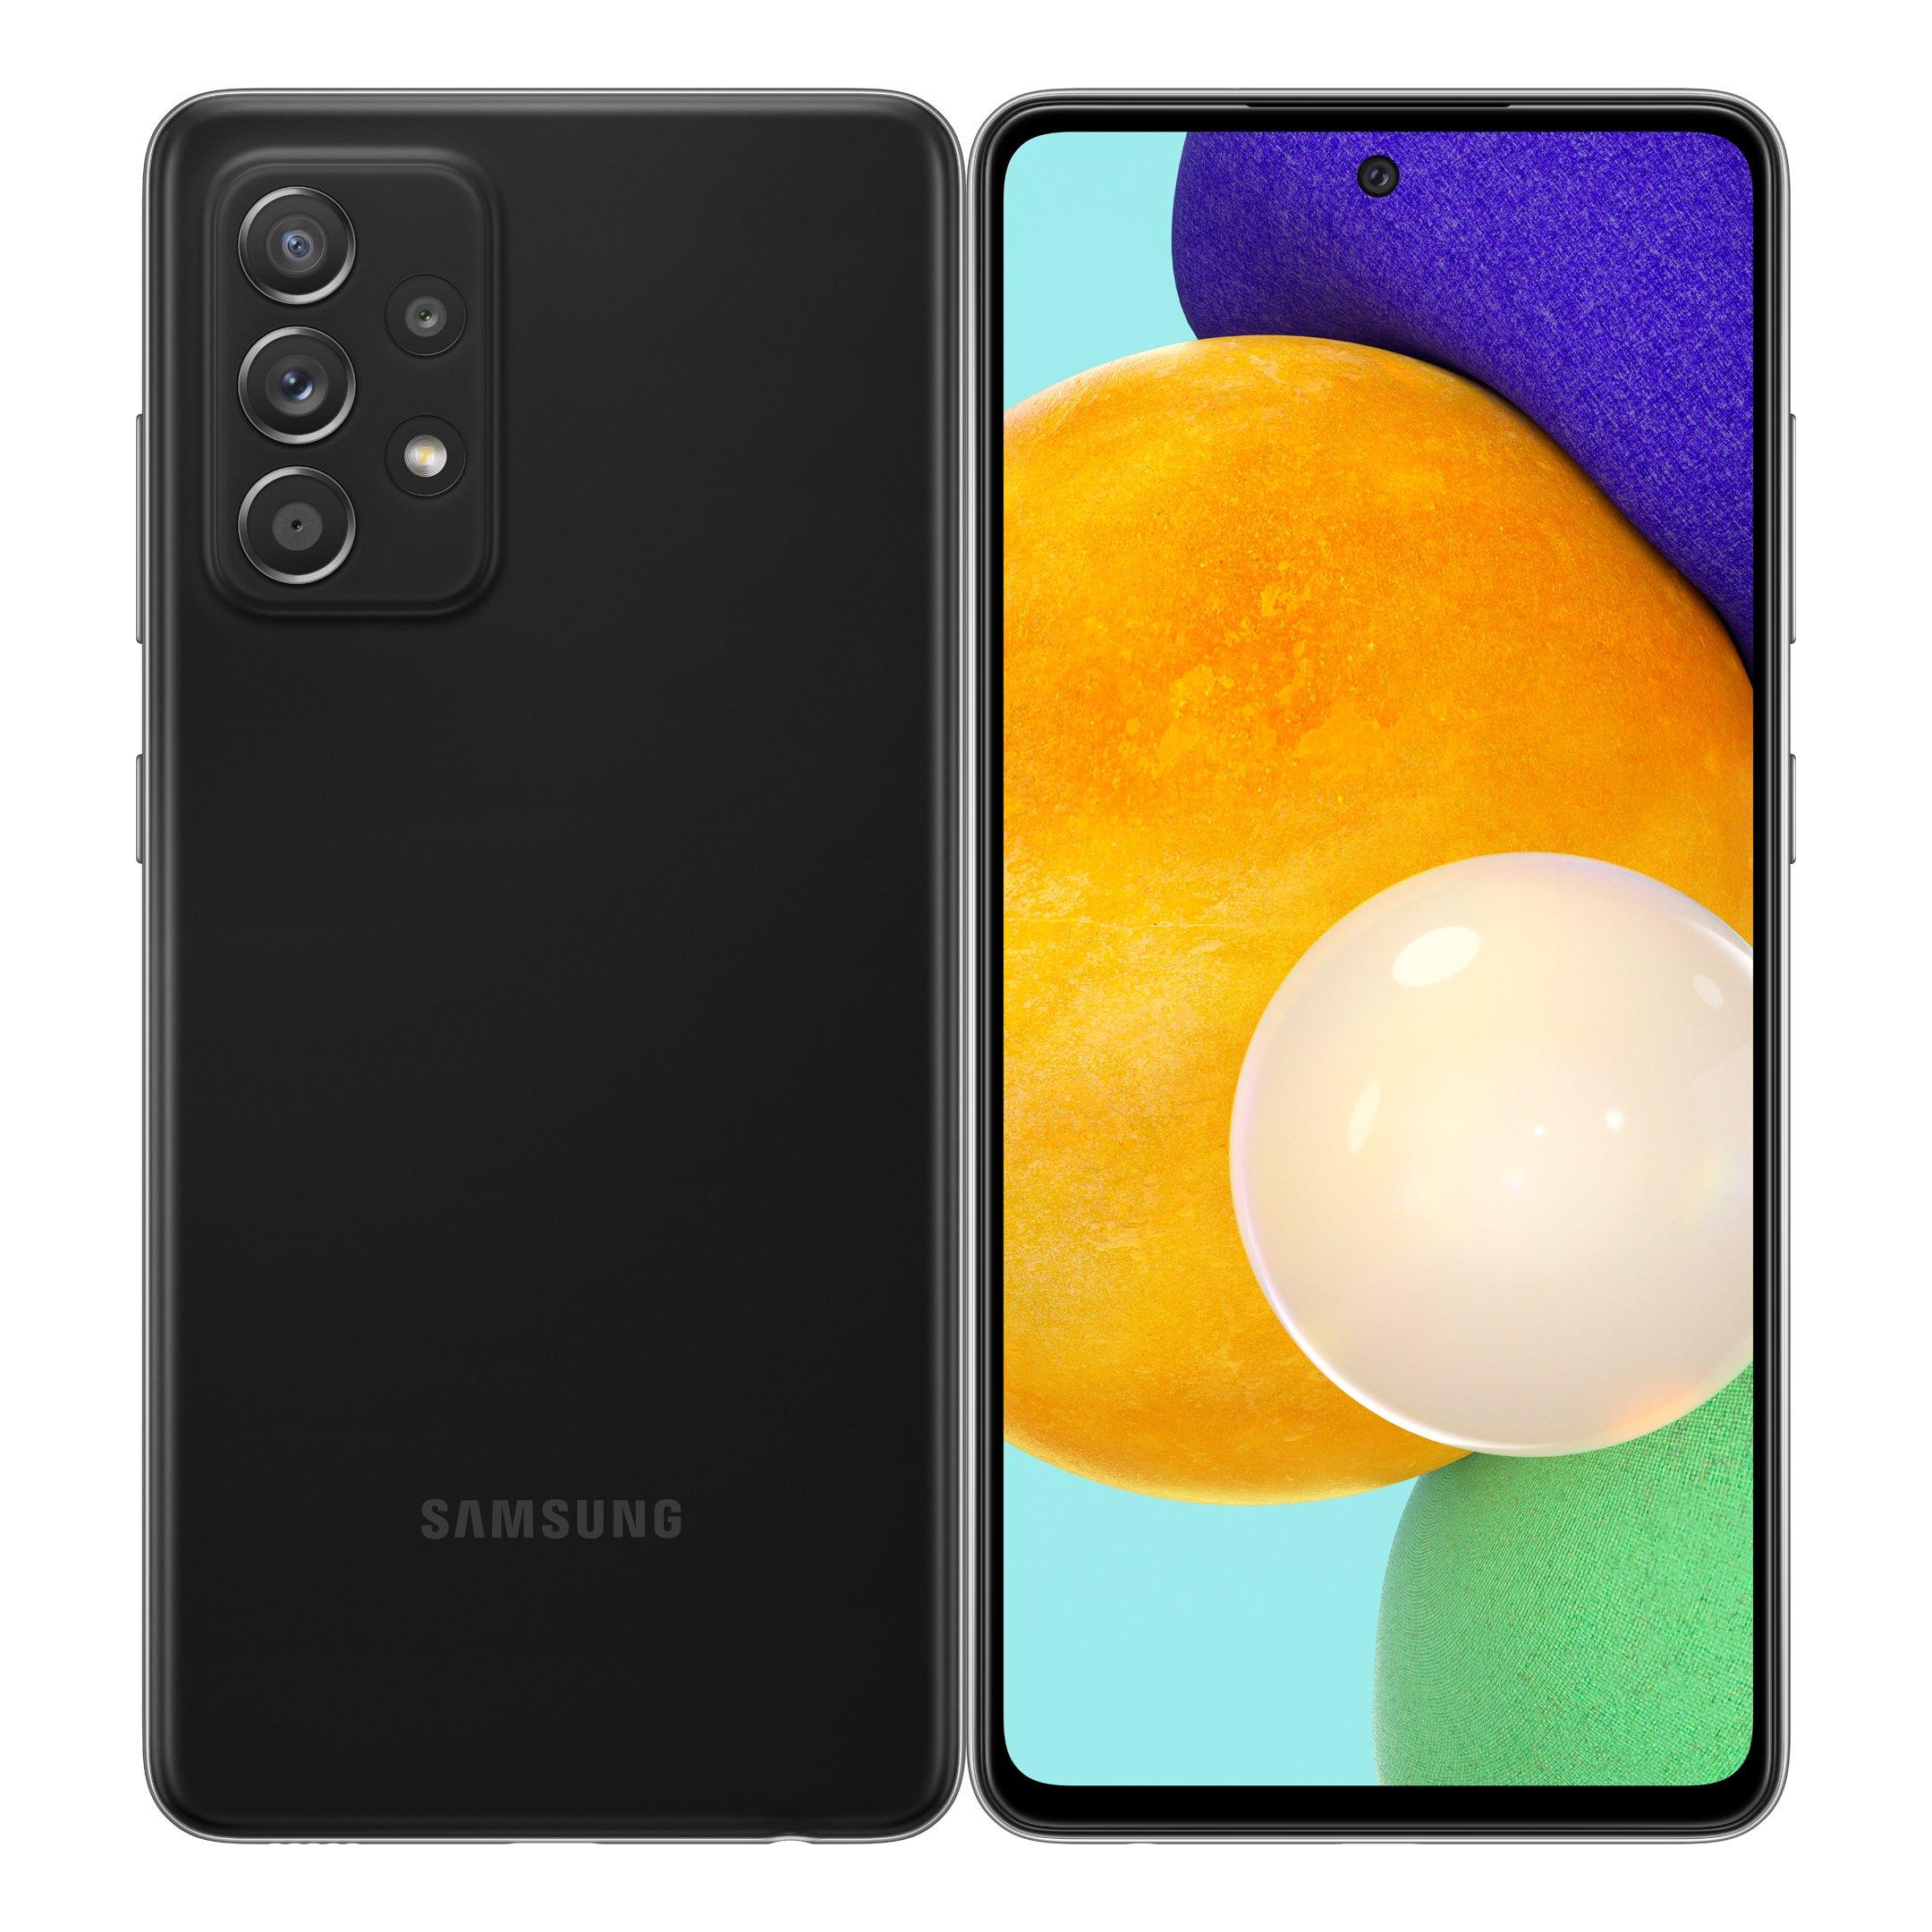 Price ksa in a52 samsung Samsung Galaxy